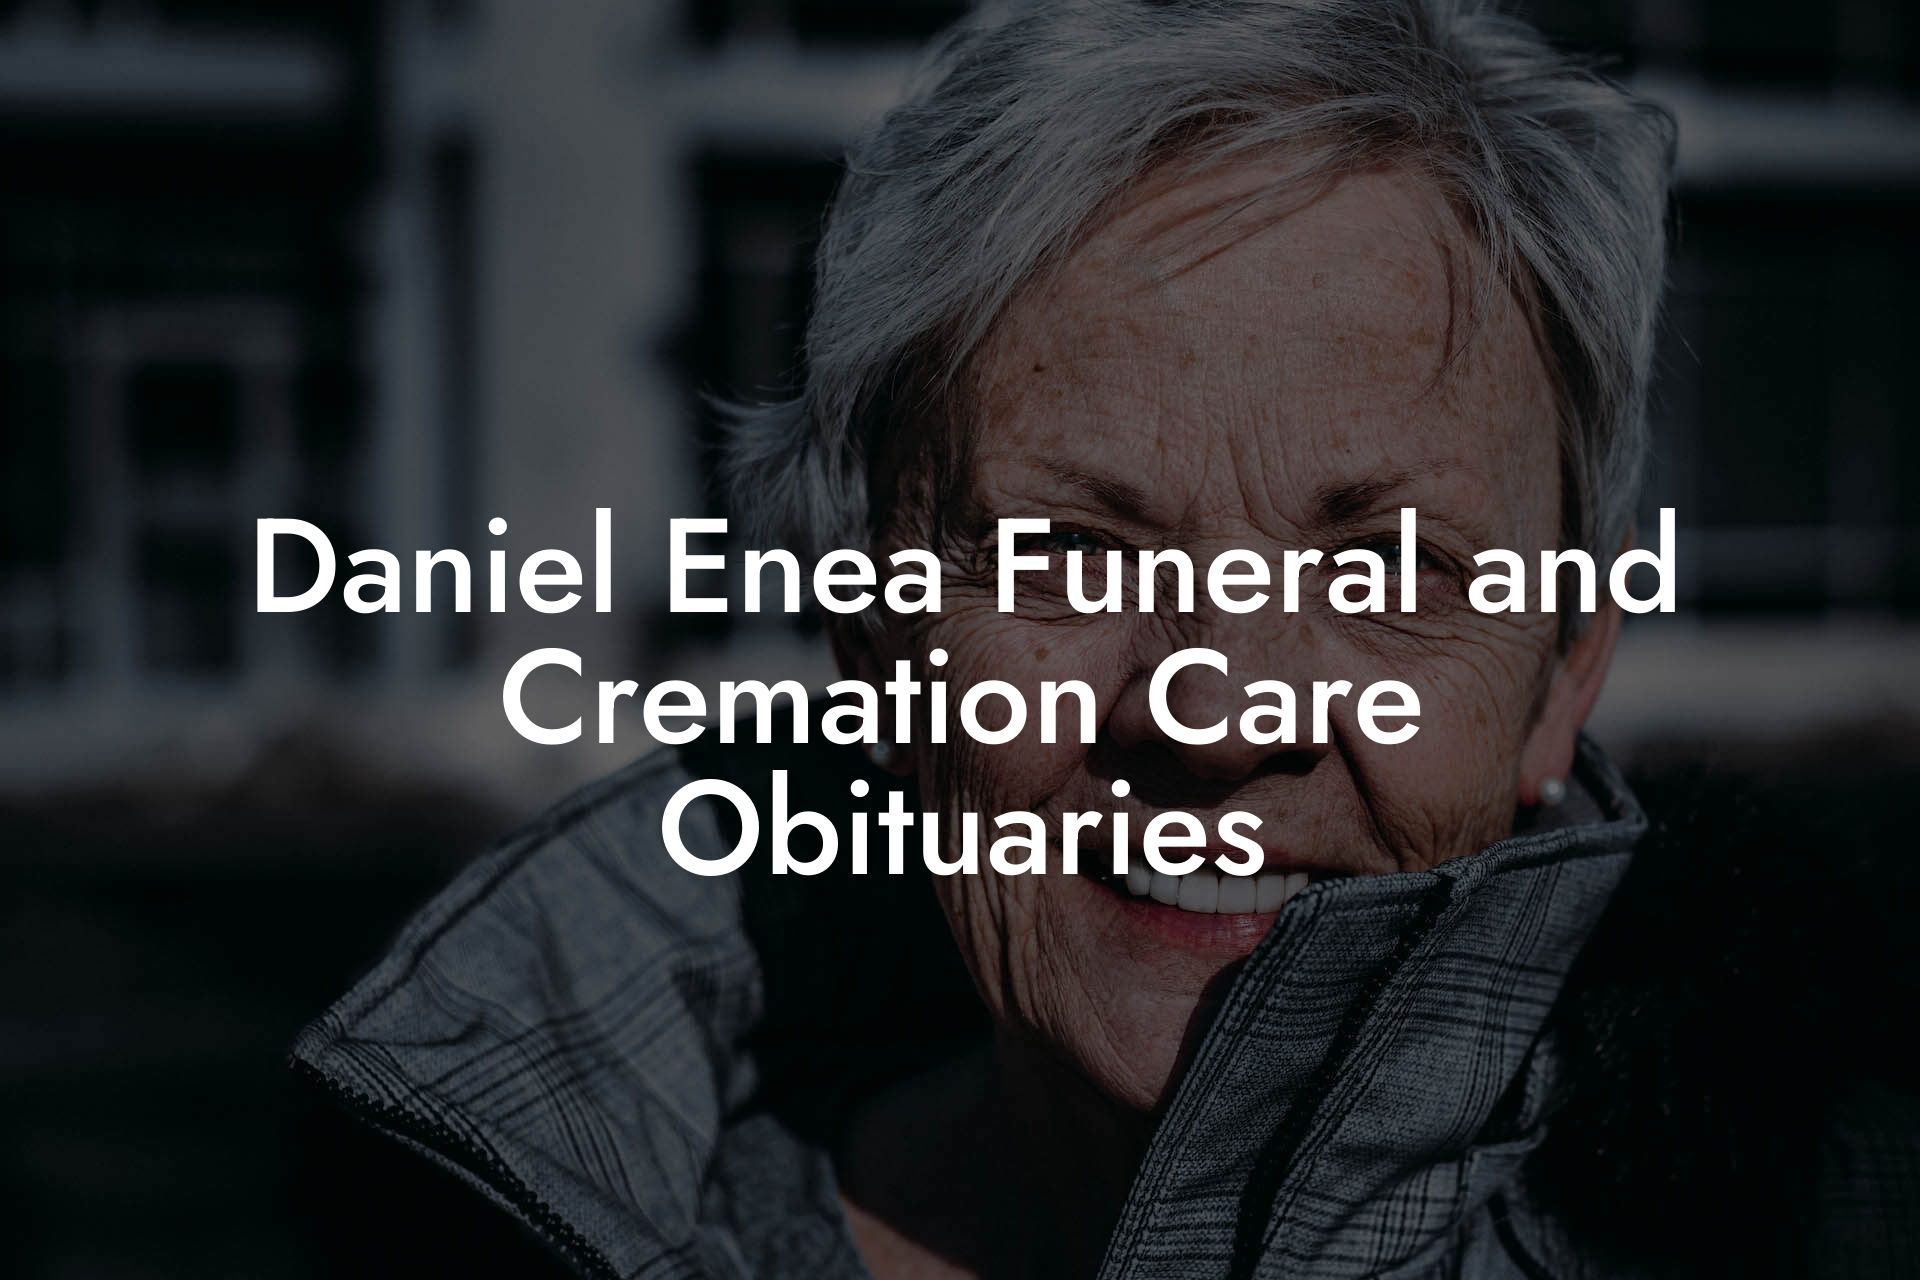 Daniel Enea Funeral and Cremation Care Obituaries